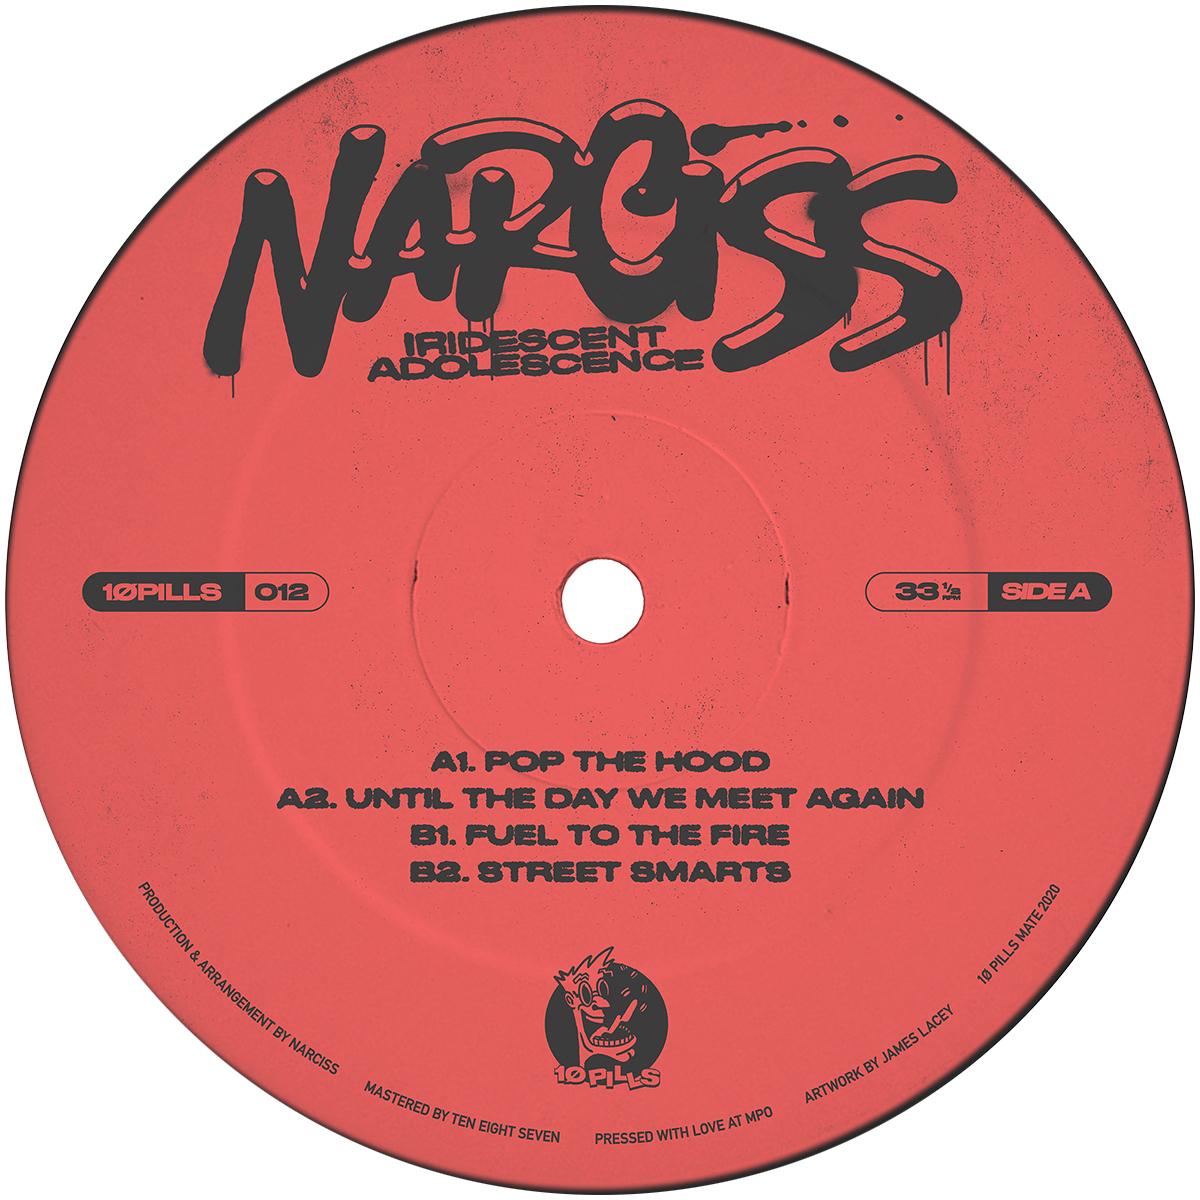 NARCISS 'IRIDESCENT ADOLESCENCE EP' 12"